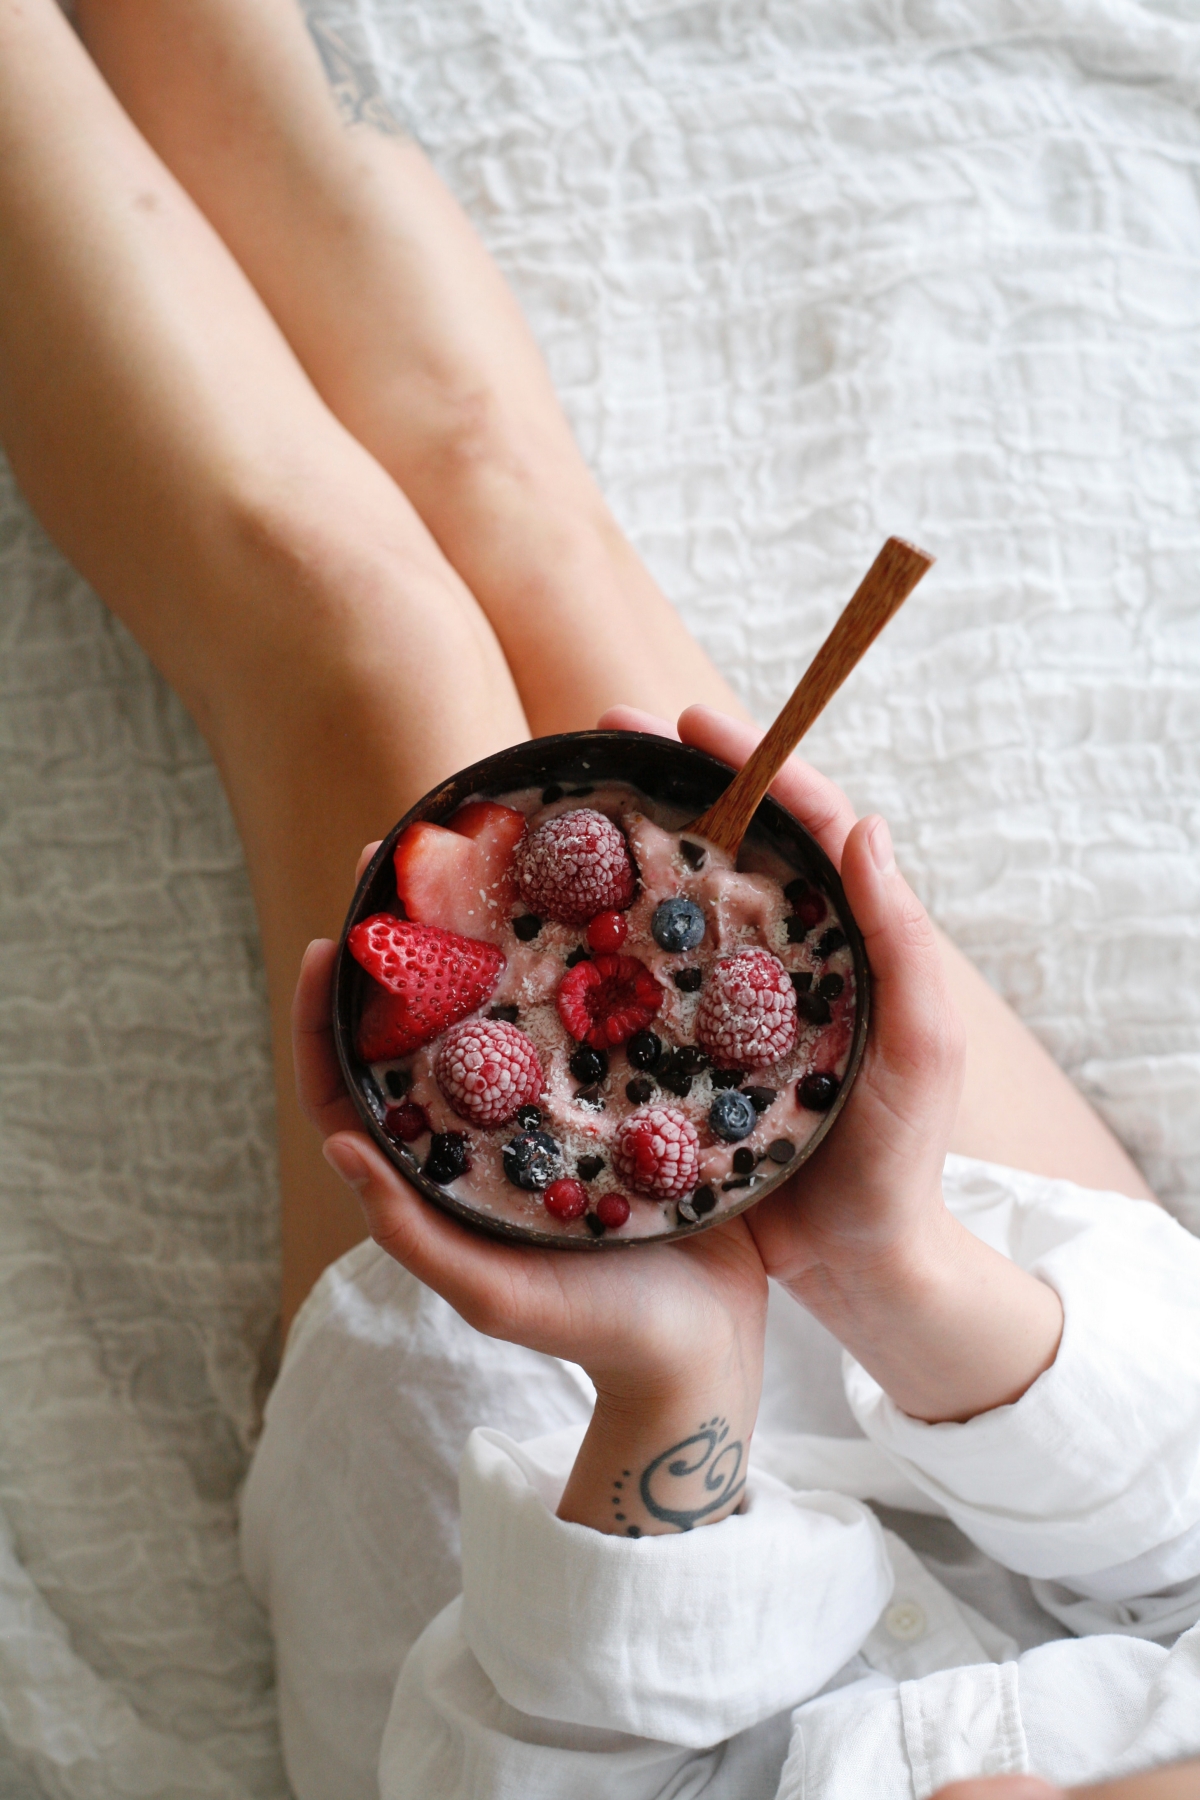 what health benefits do raspberries have